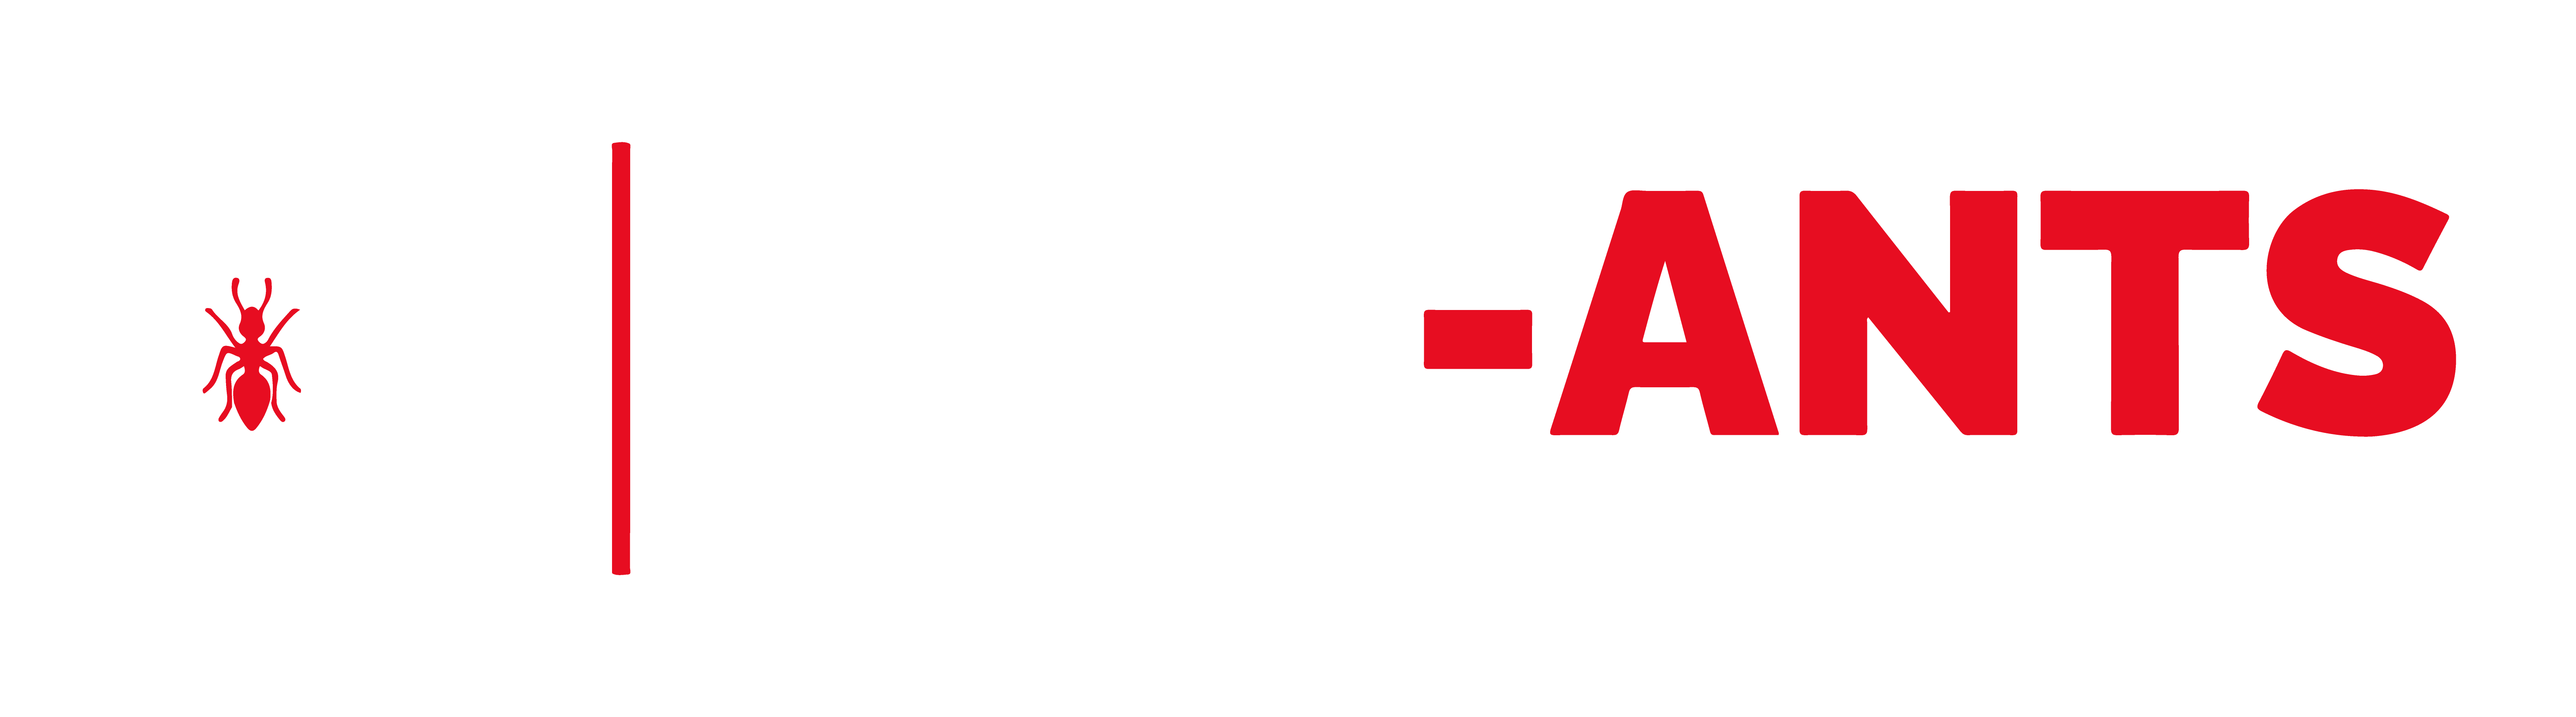 Digi-Ants Digital World